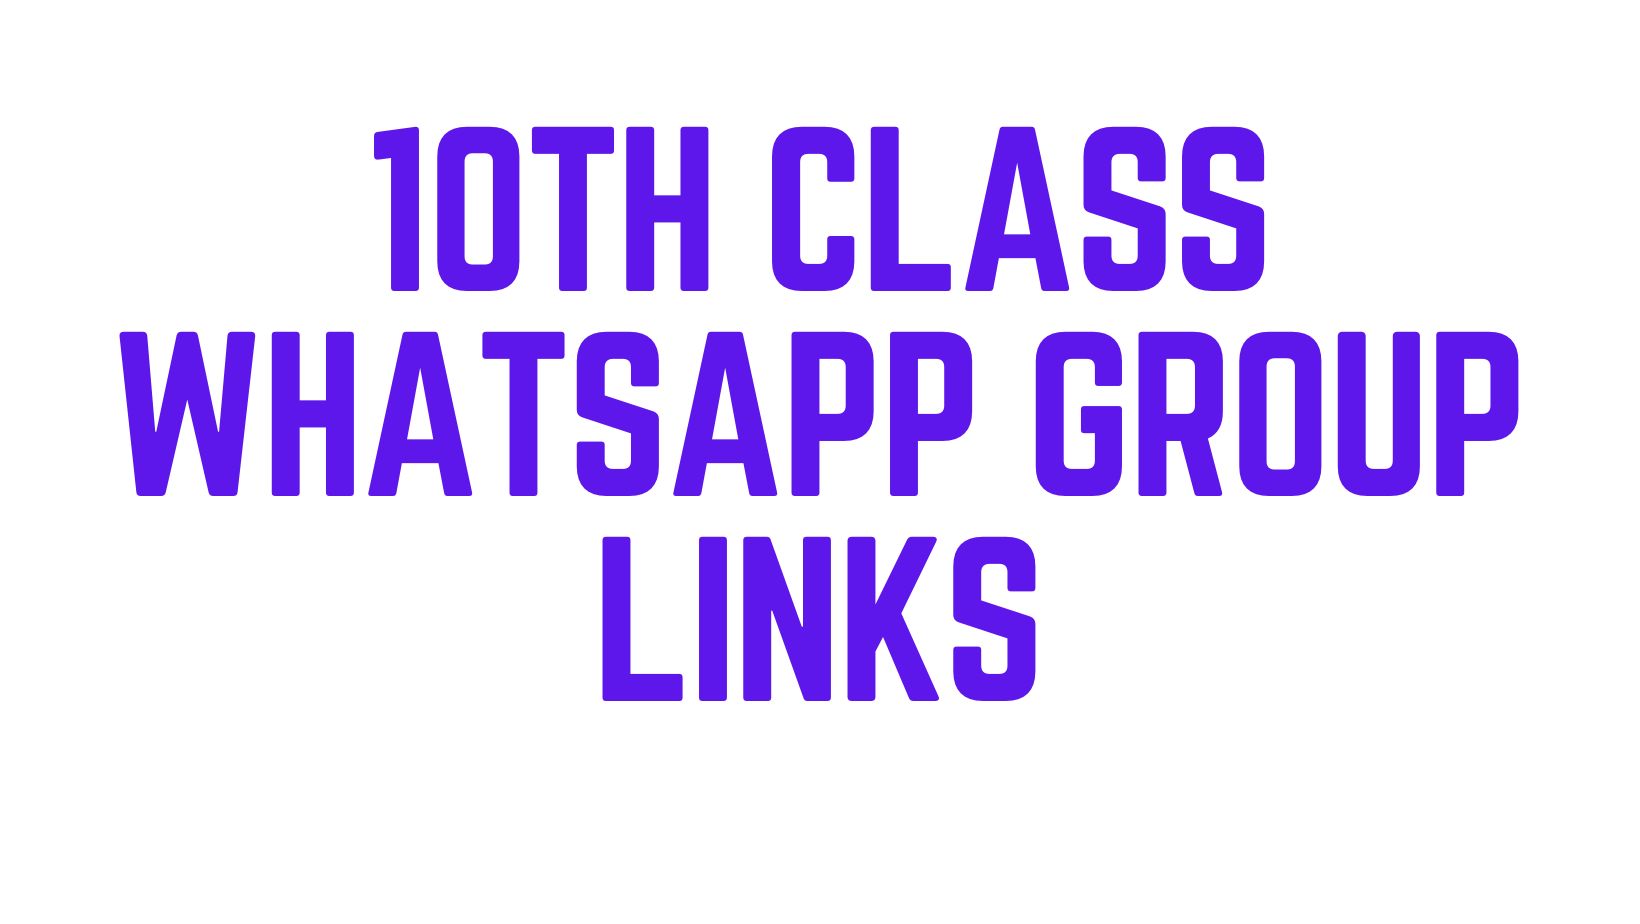 10th Class WhatsApp Group Links